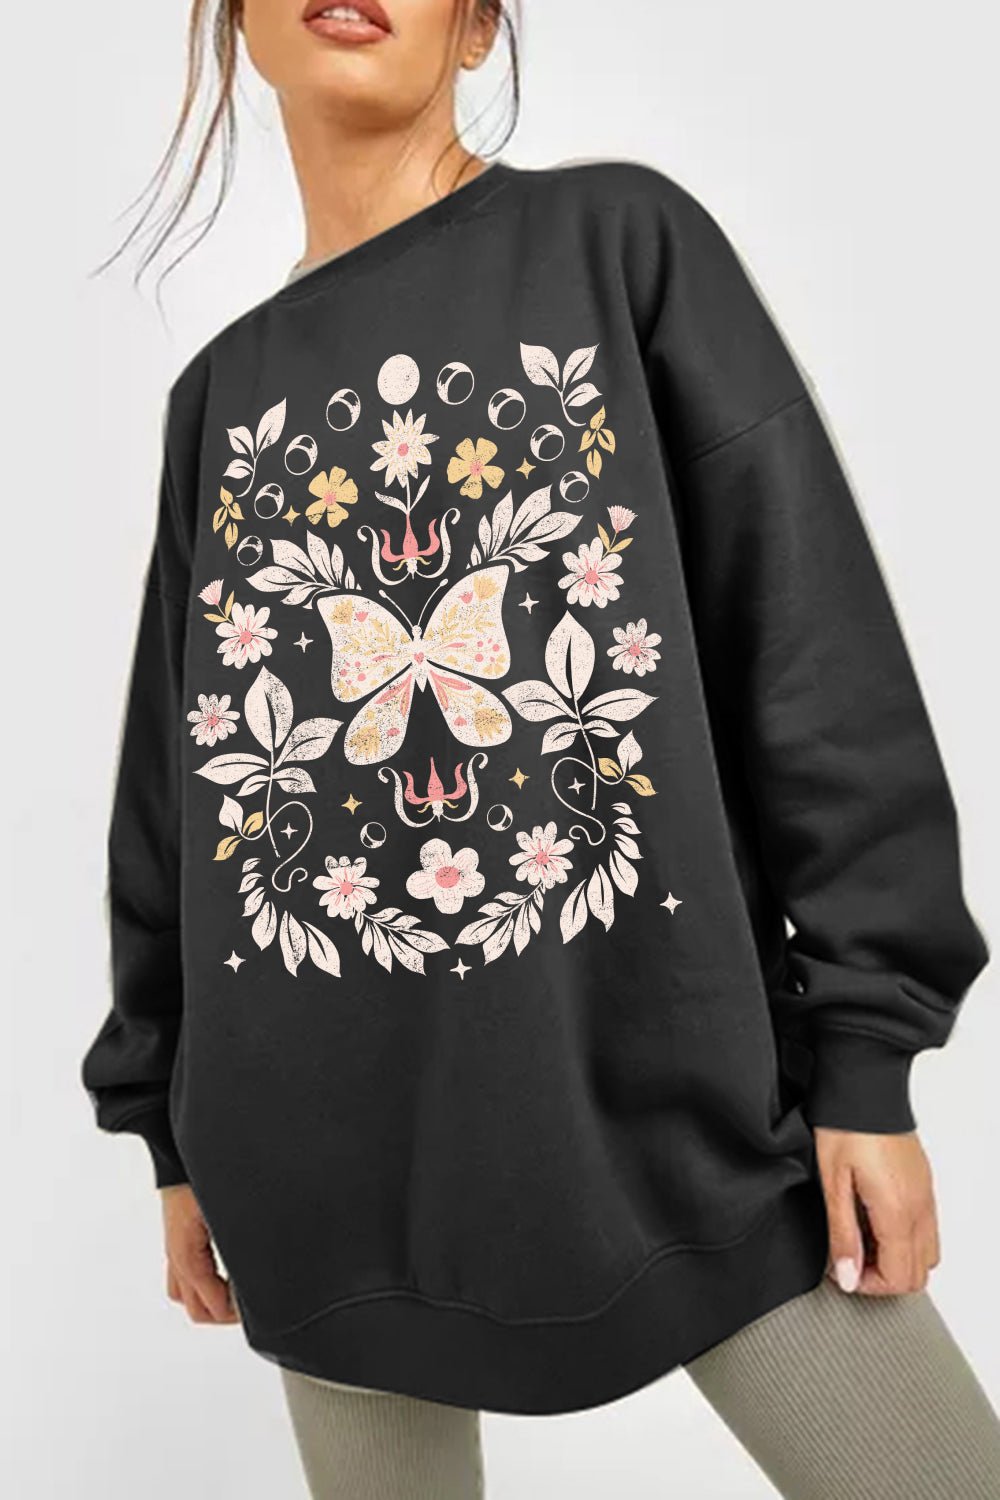 Flower and Butterfly Graphic Sweatshirt - Tangerine Goddess